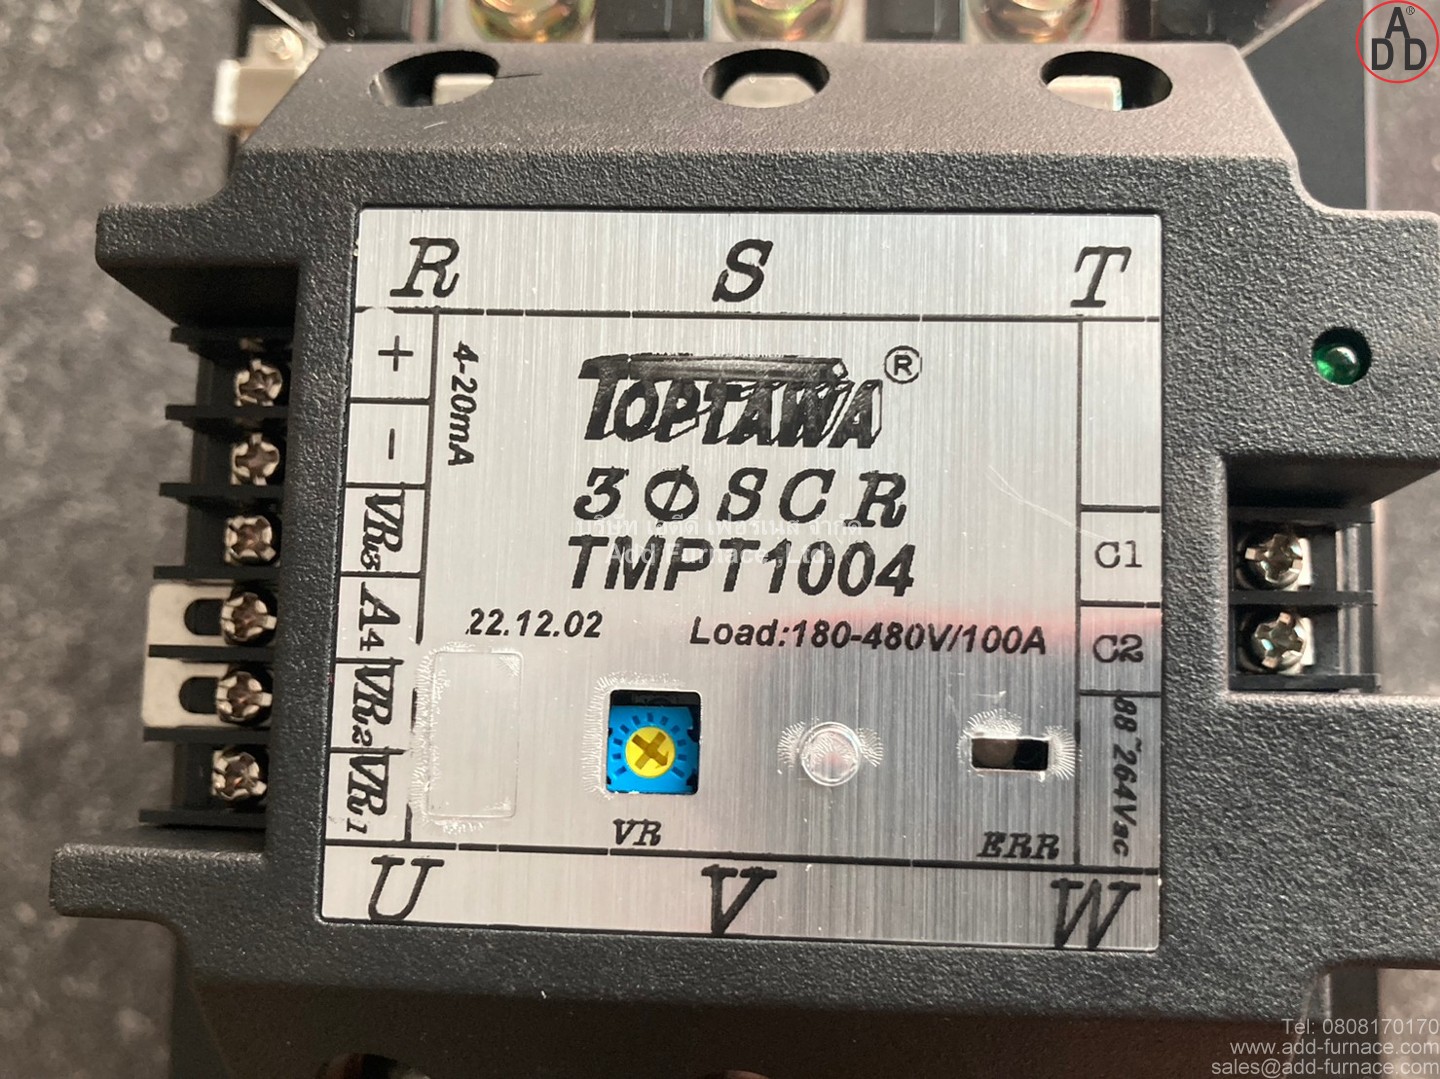 SCR TMPT1004 100A 380/440V Power Regulator (14)